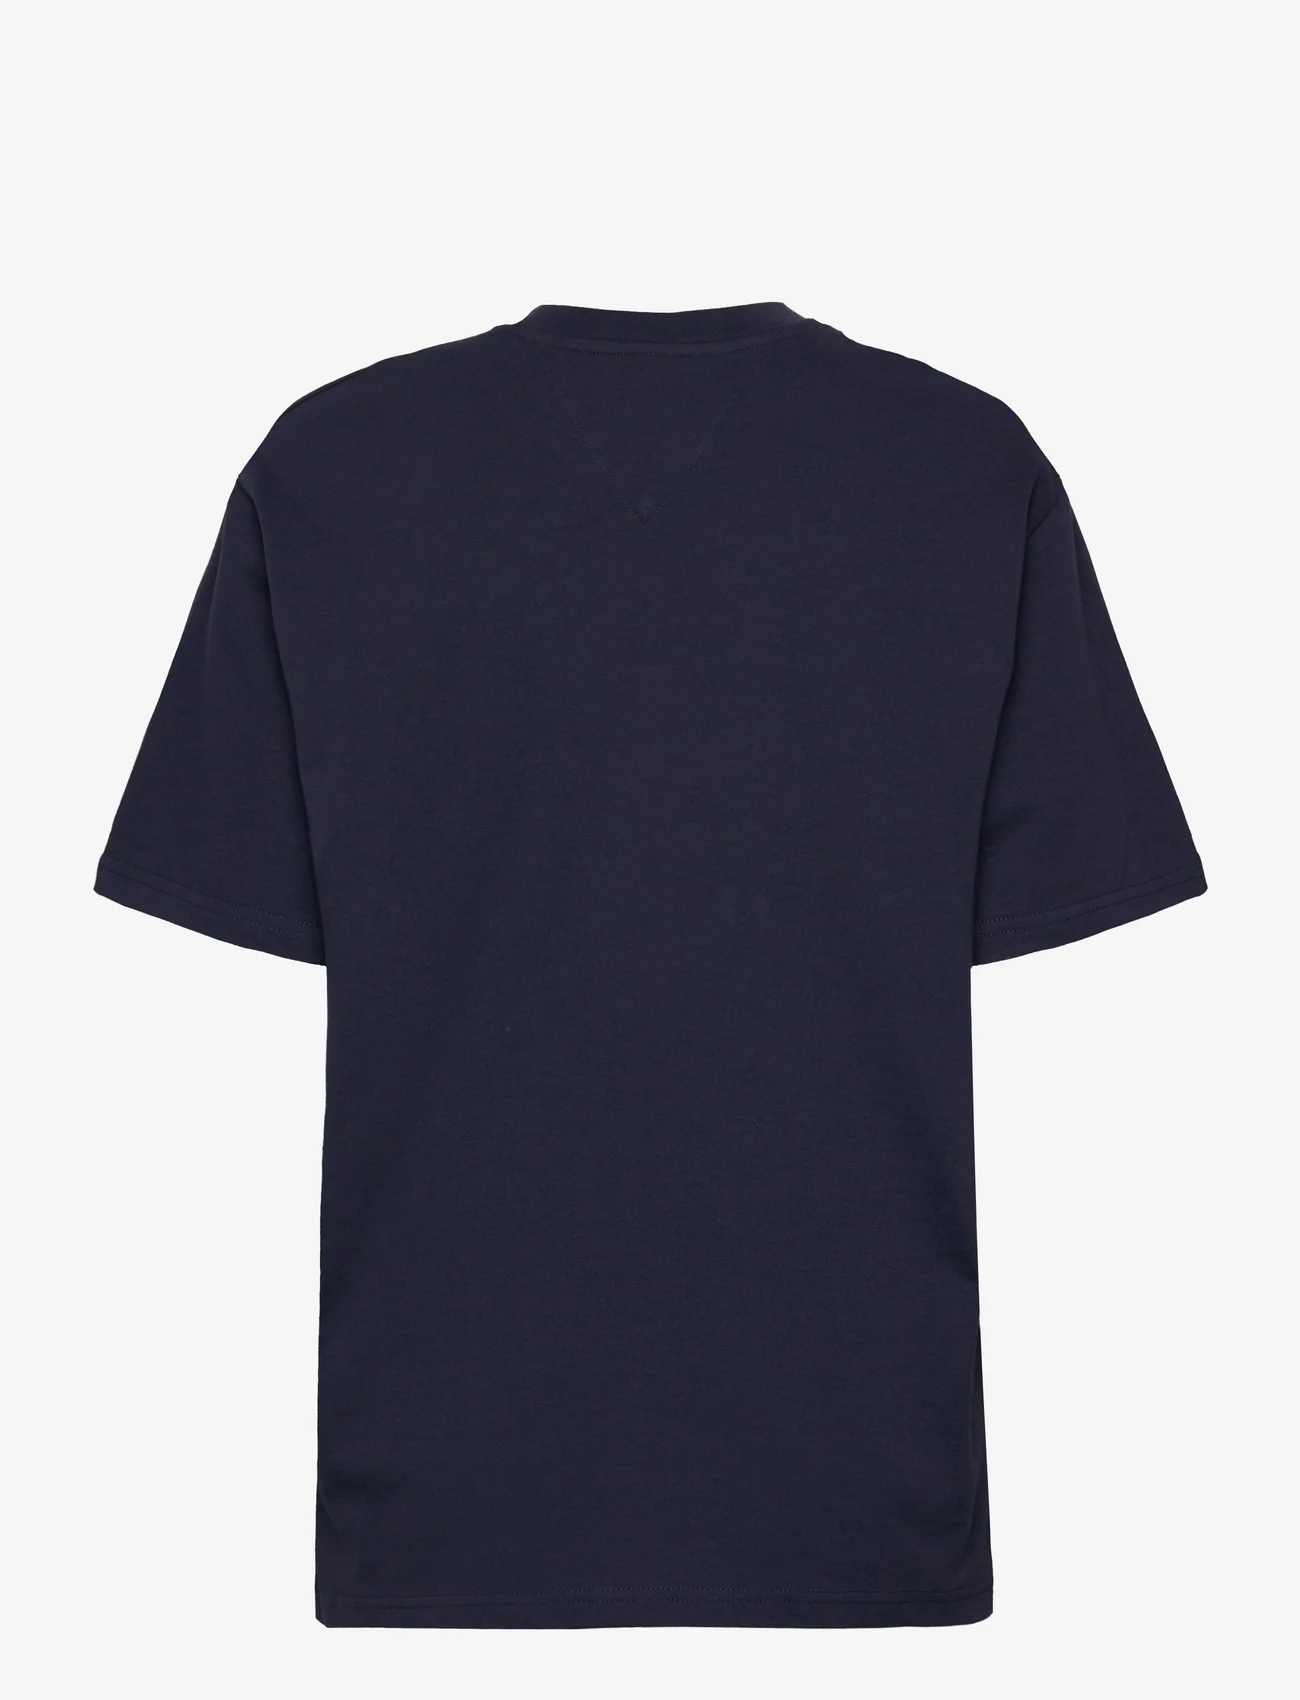 Tommy Jeans - TJW RLX WORLDWIDE TEE - t-shirt & tops - twilight navy - 1